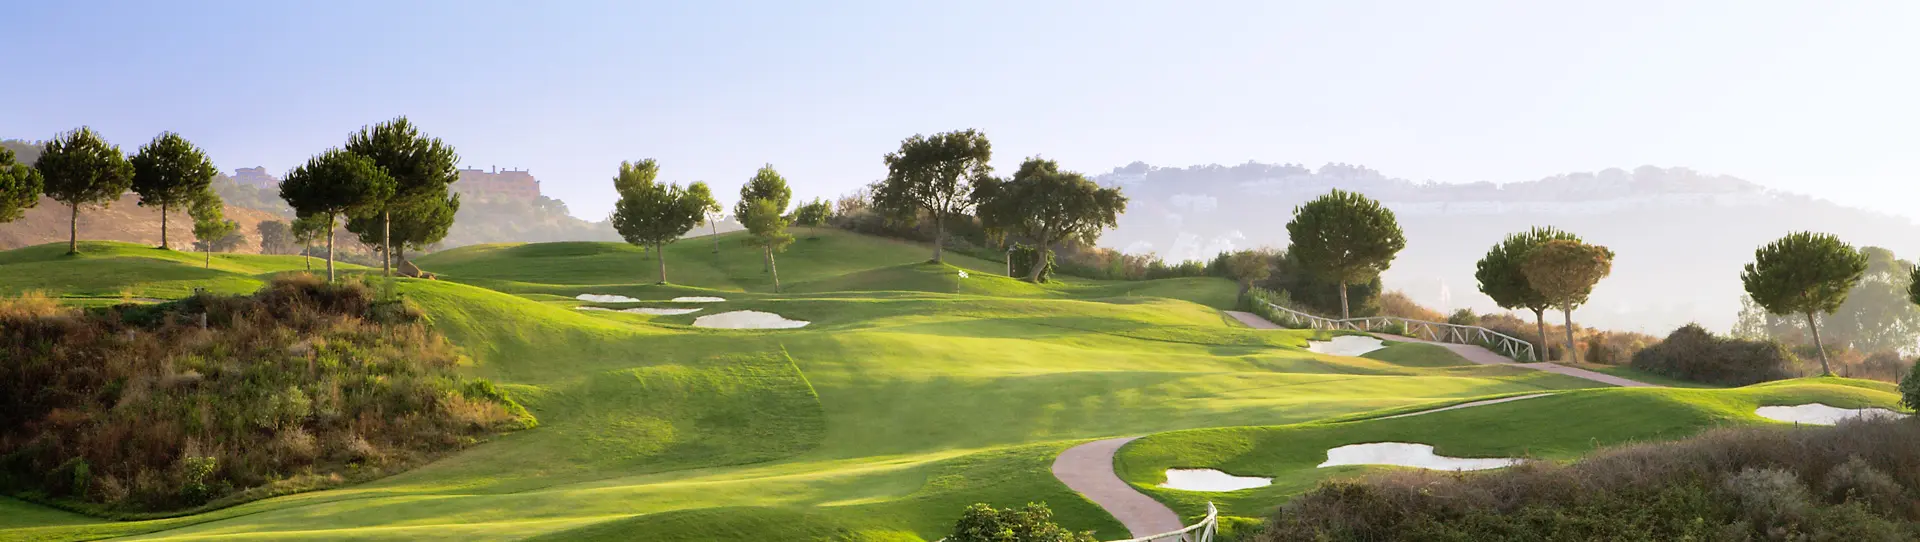 Spain Golf Driving Range - La Cala Resort Academy - Photo 3